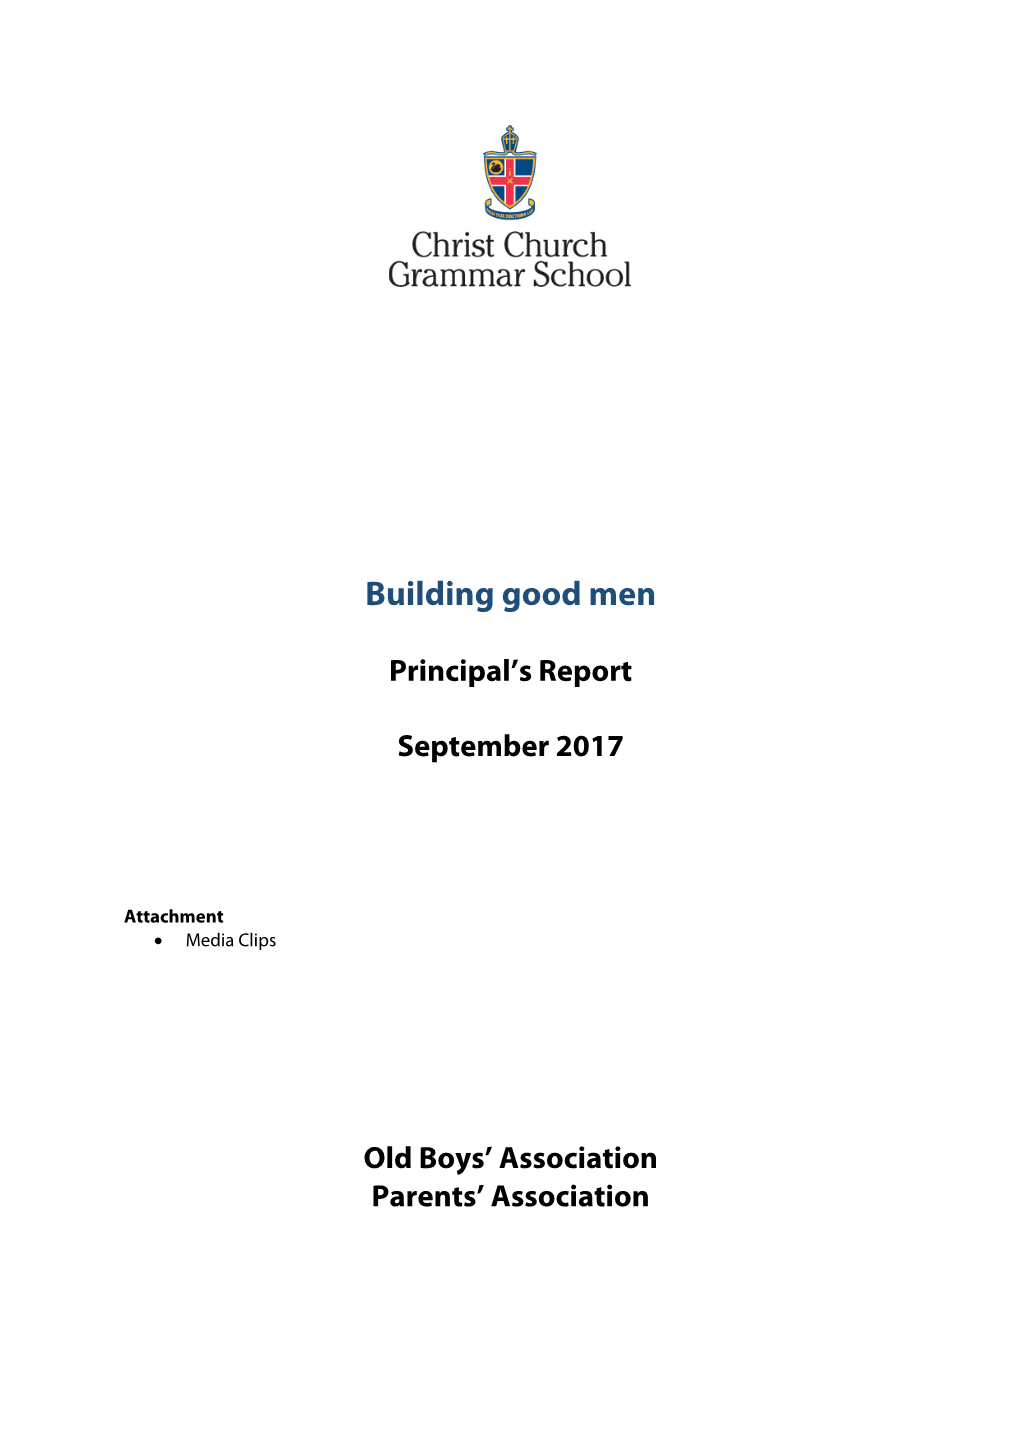 Building Good Men